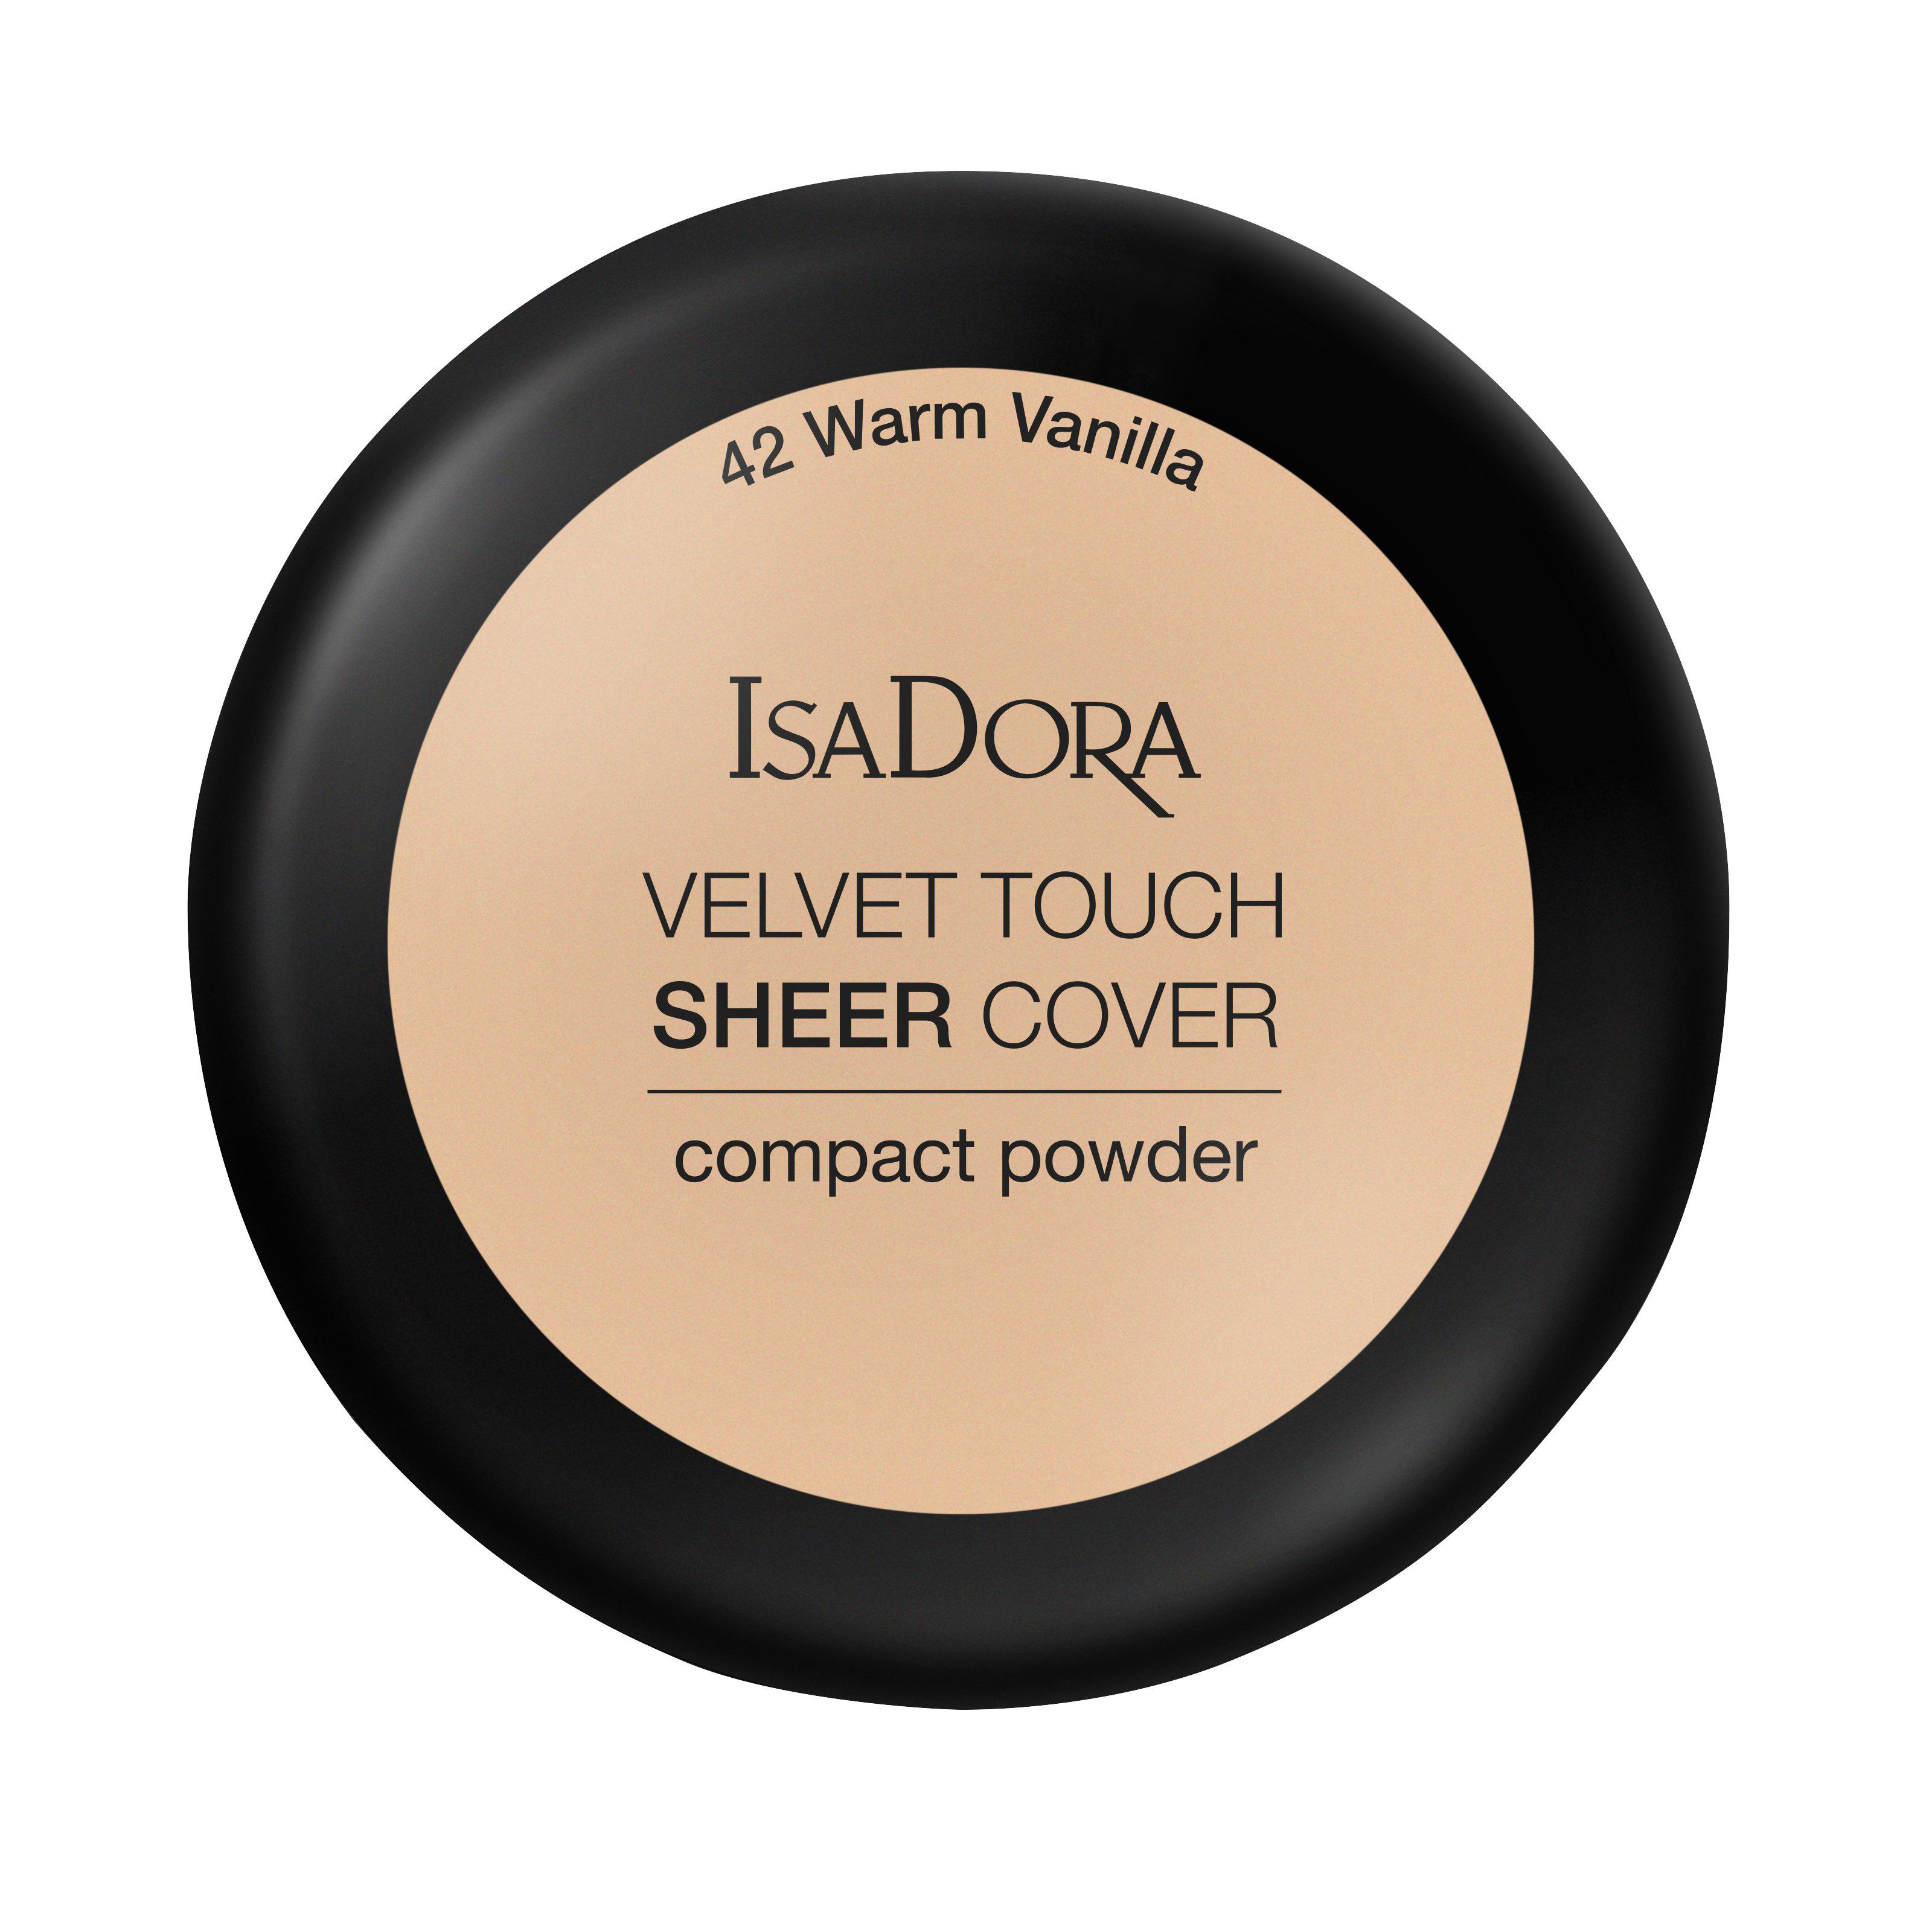 IsaDora Velvet Touch Sheer Cover Compact Powder 42 Warm Vanilla